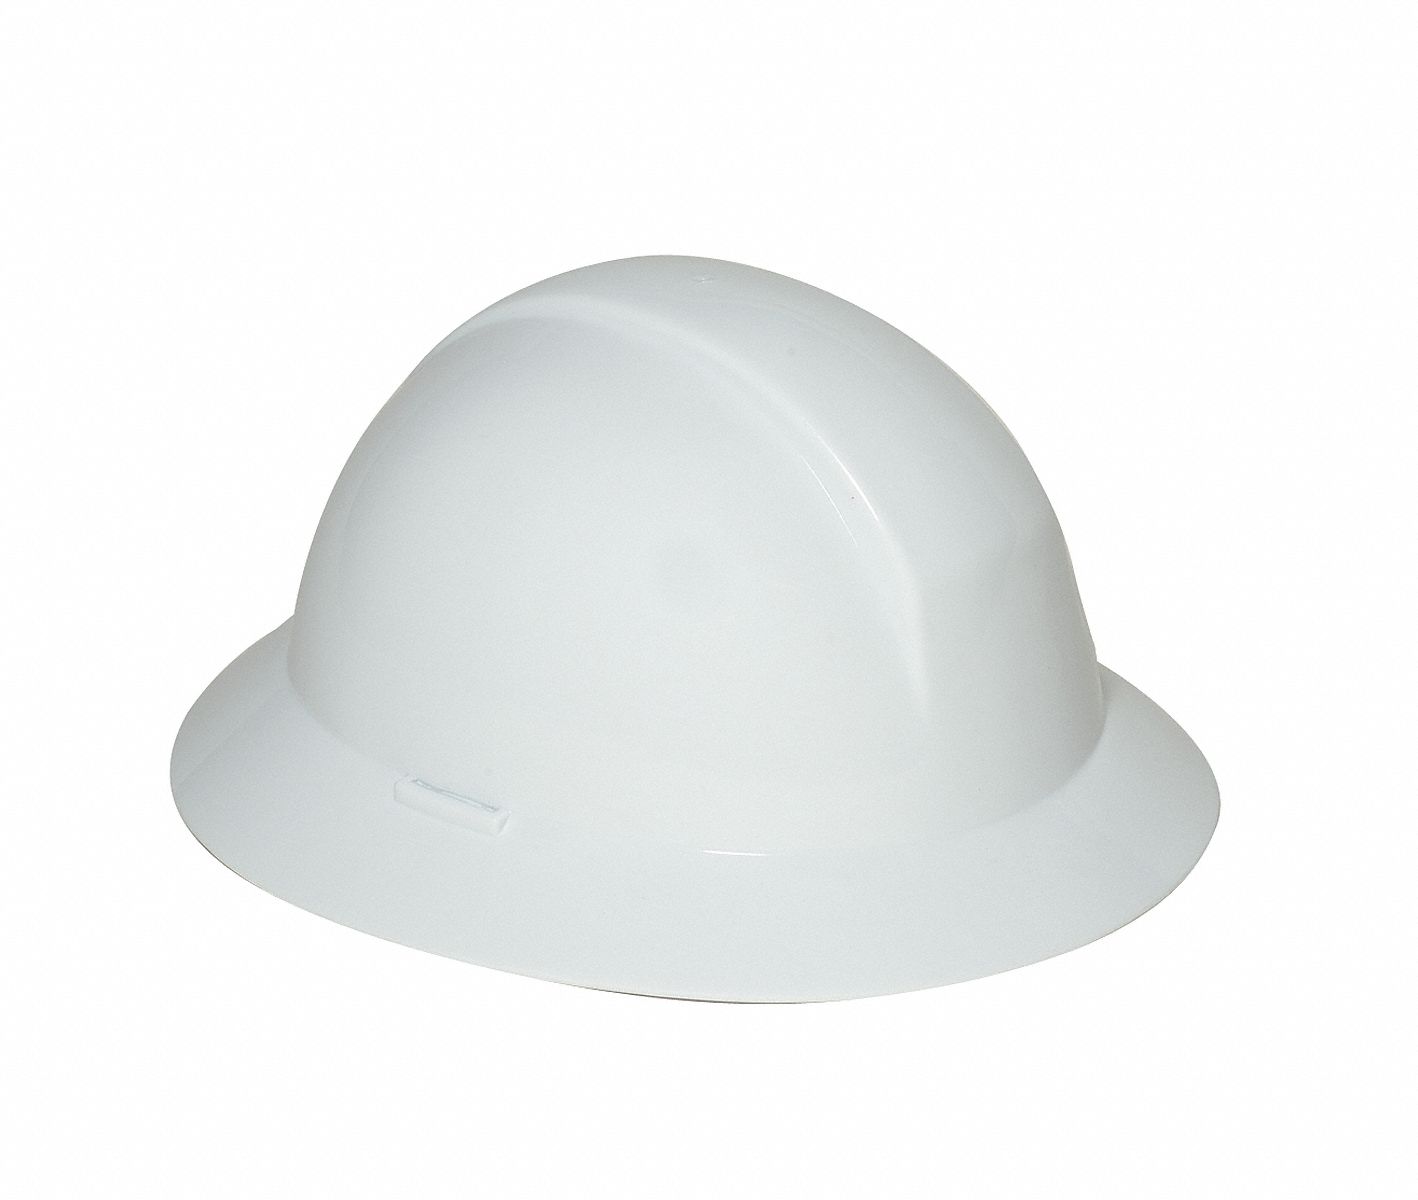 White Thomas Scientific Ratchet Adjustment Honeywell A49R010000 A49R Everest Full Brim Hard Hat 